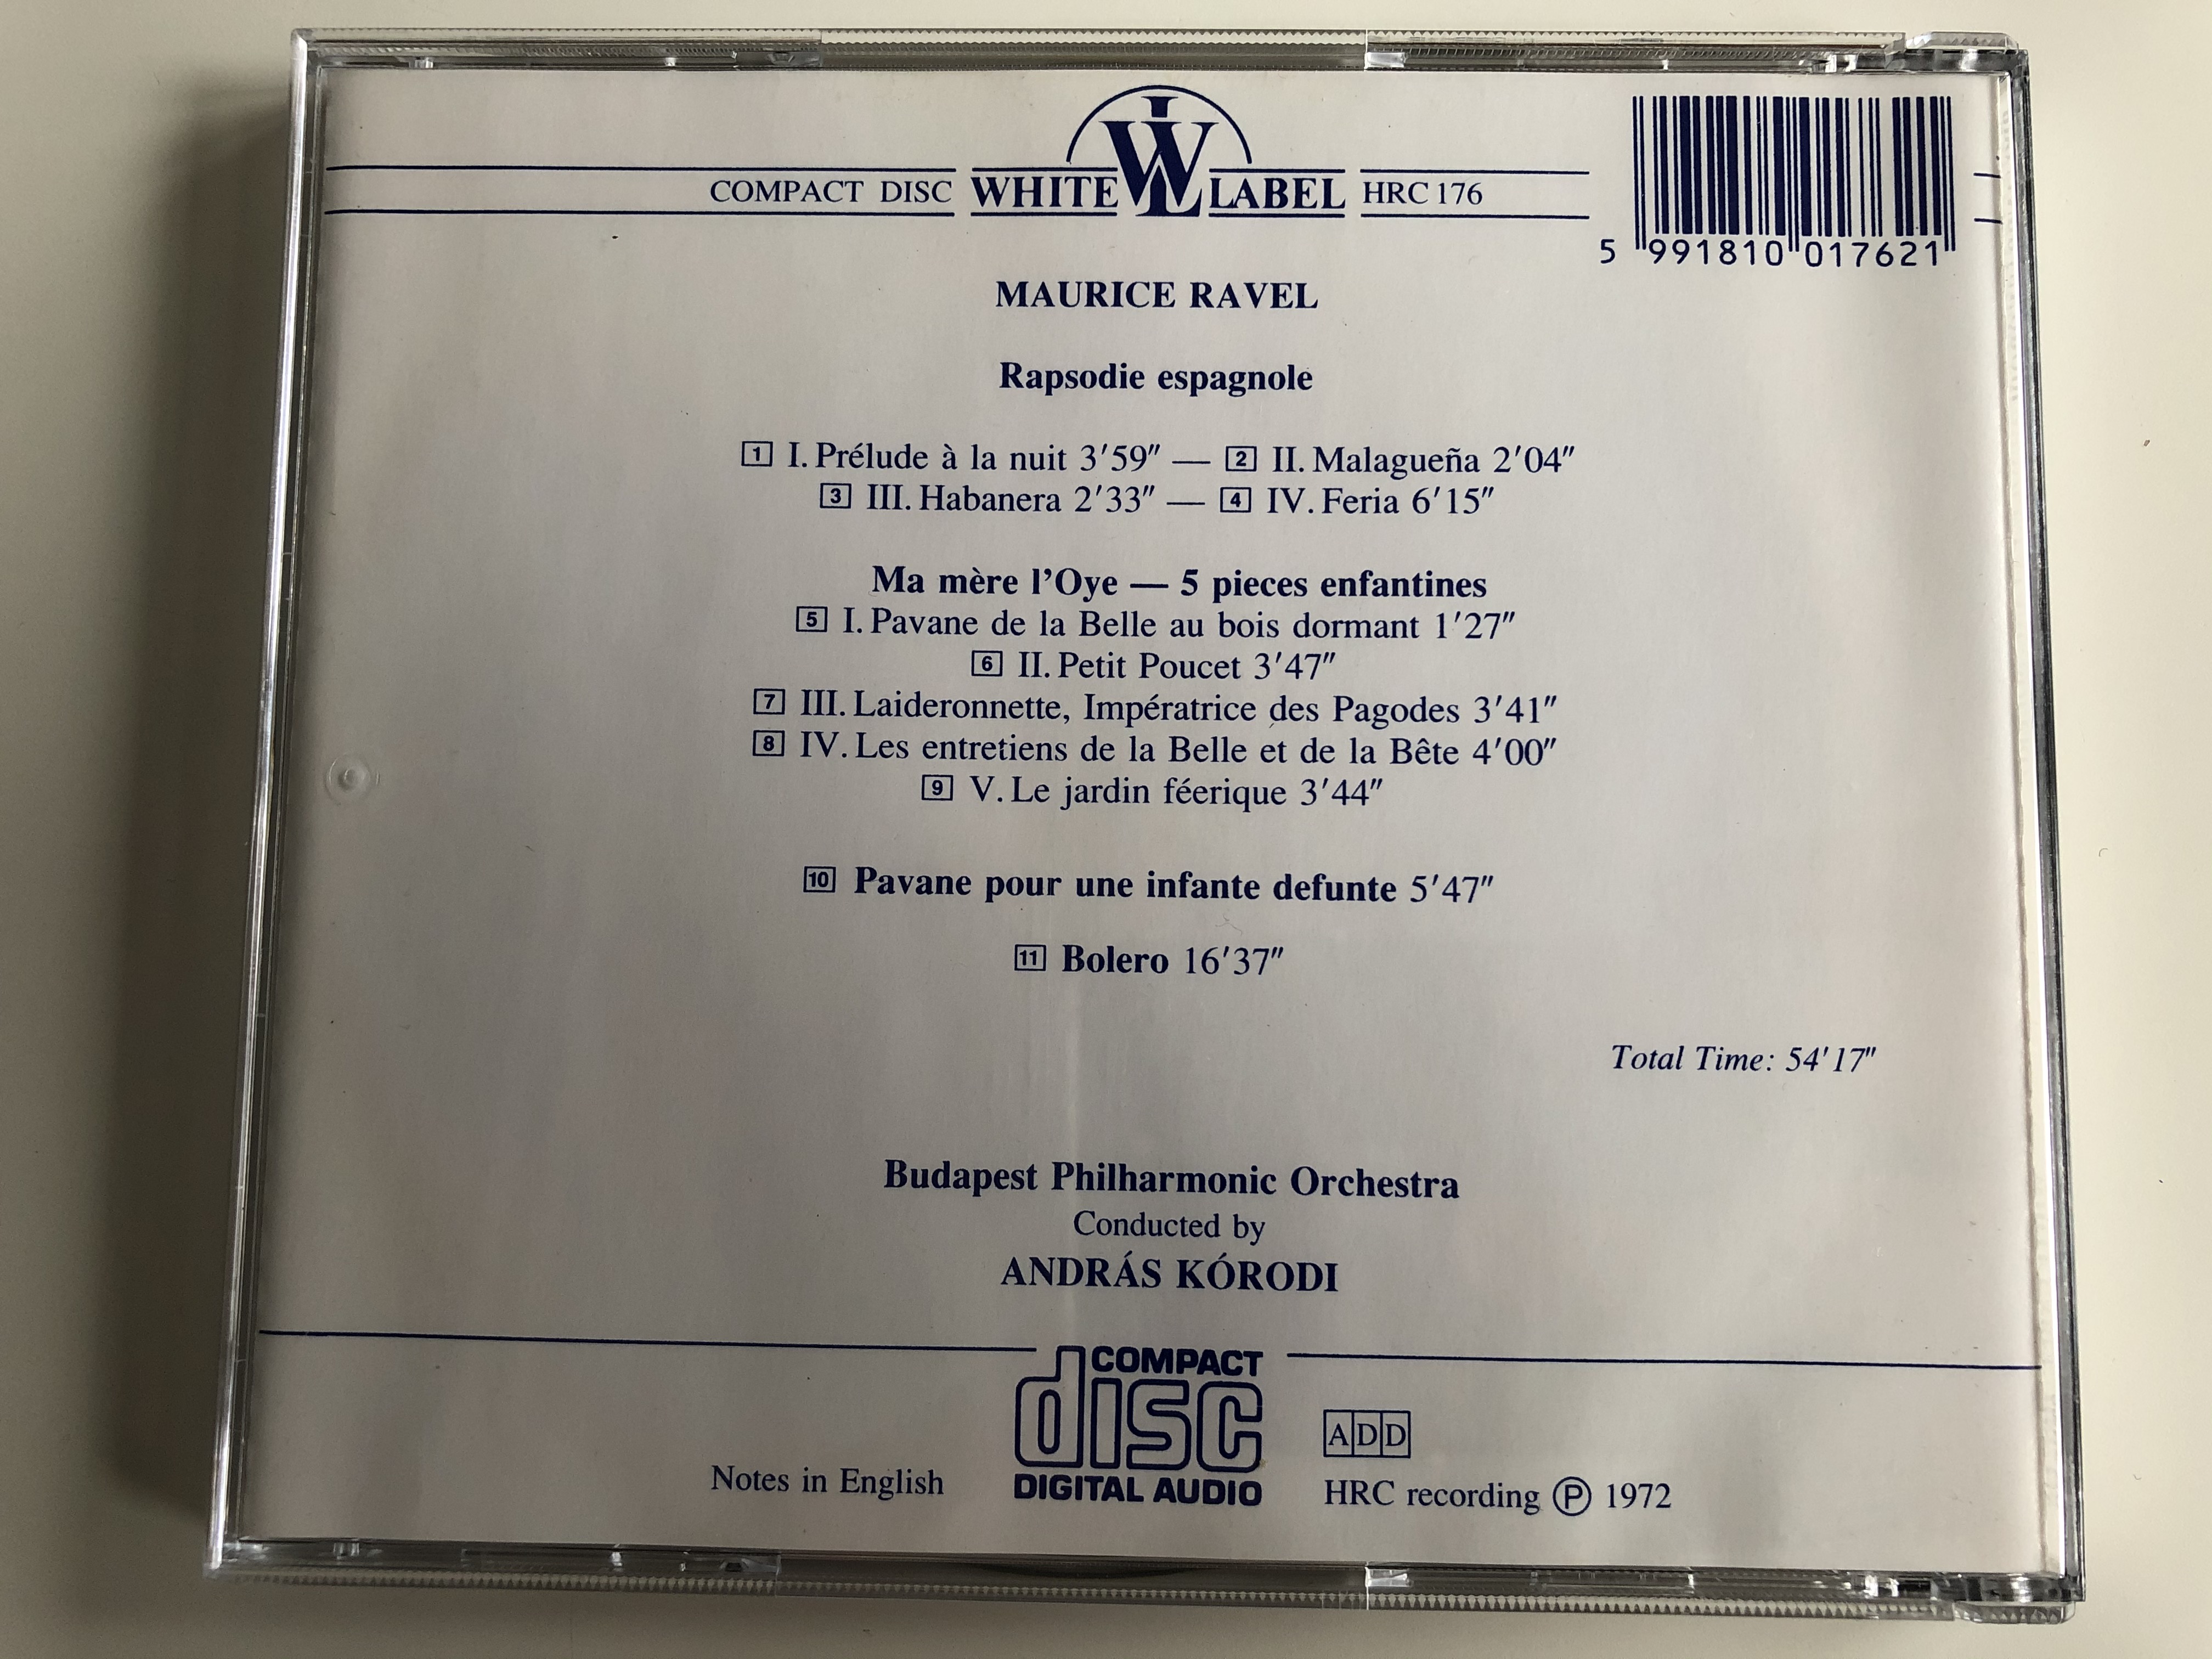 ravel-pavane-bolero-rhapsodie-espagnole-ma-mere-l-oye-budapest-philharmonic-orchstra-andr-s-k-rodi-white-label-audio-cd-1972-stereo-hrc-176-6-.jpg